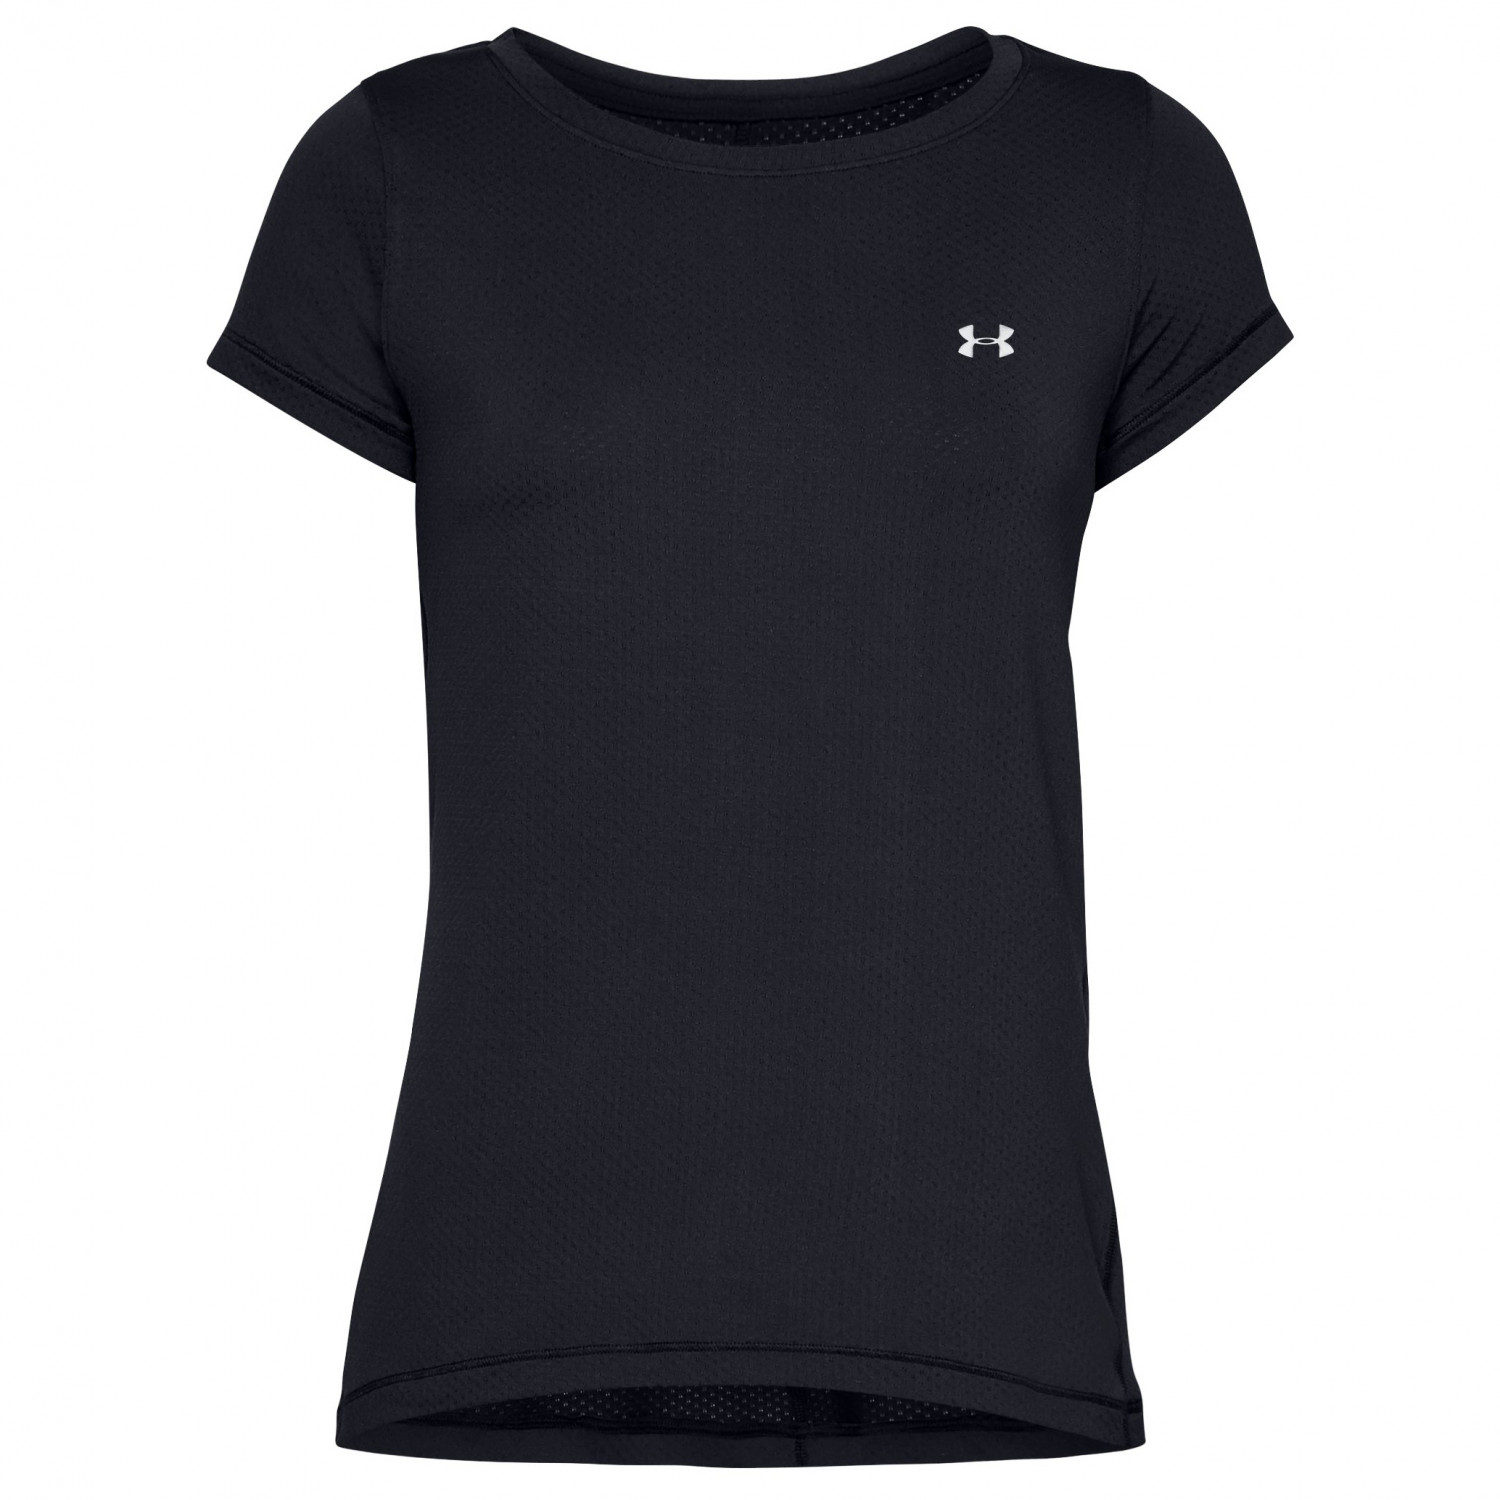 Функциональная рубашка Under Armour Women's UA Heatgear Armour S/S, цвет Black/Metallic Silver футболка с короткими рукавами ua tech under armour цвет carbon heather black